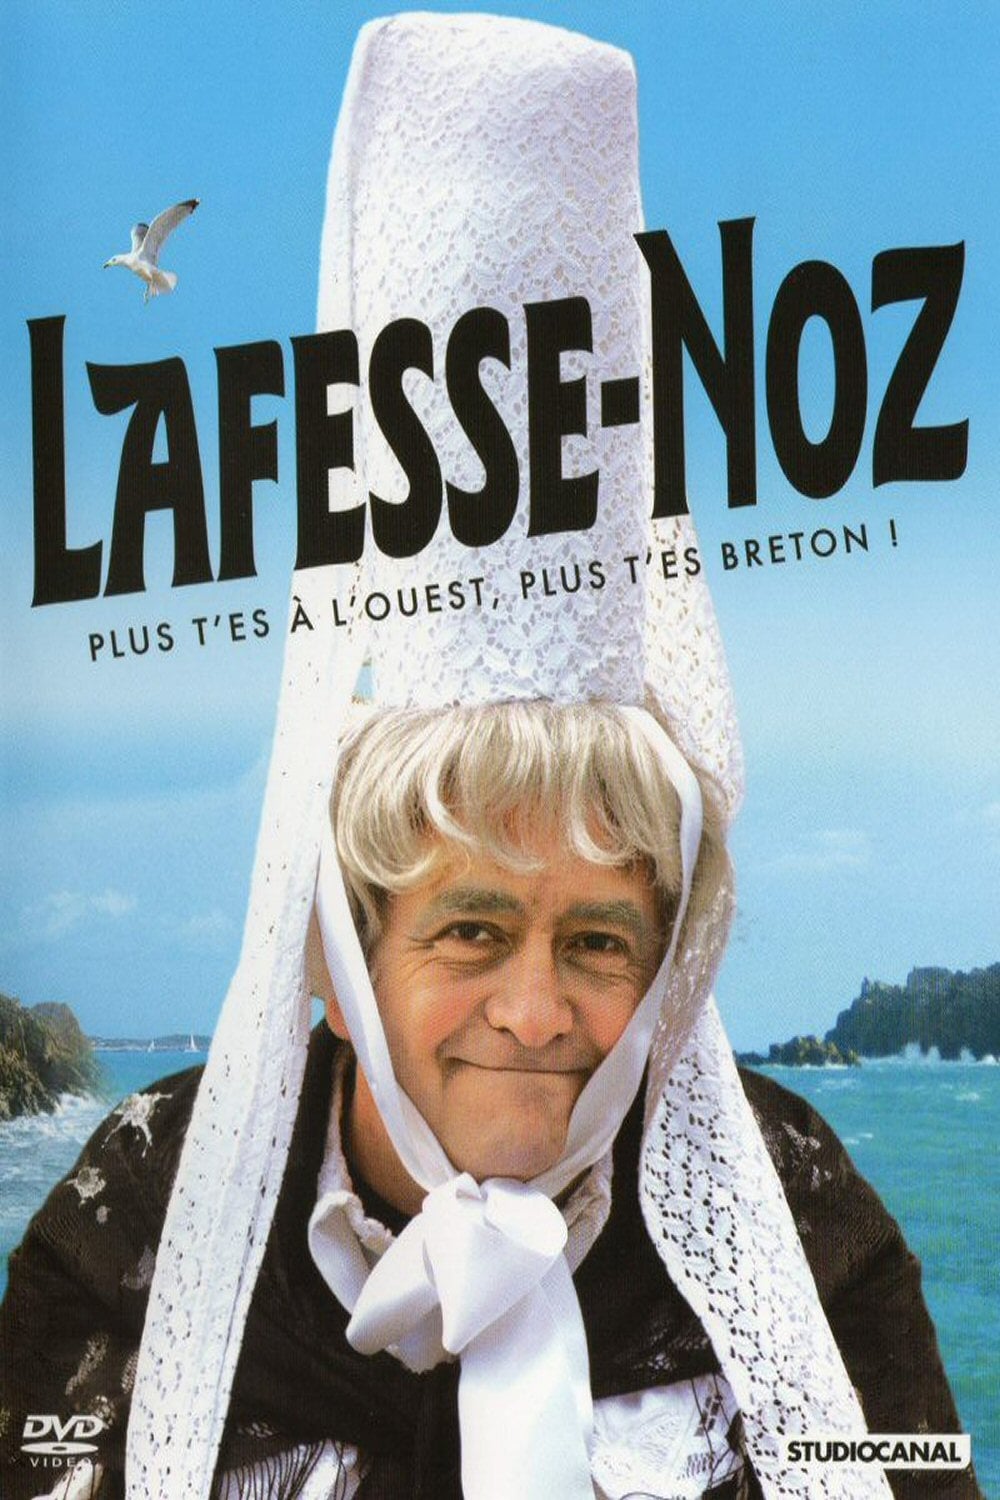 Lafesse-Noz